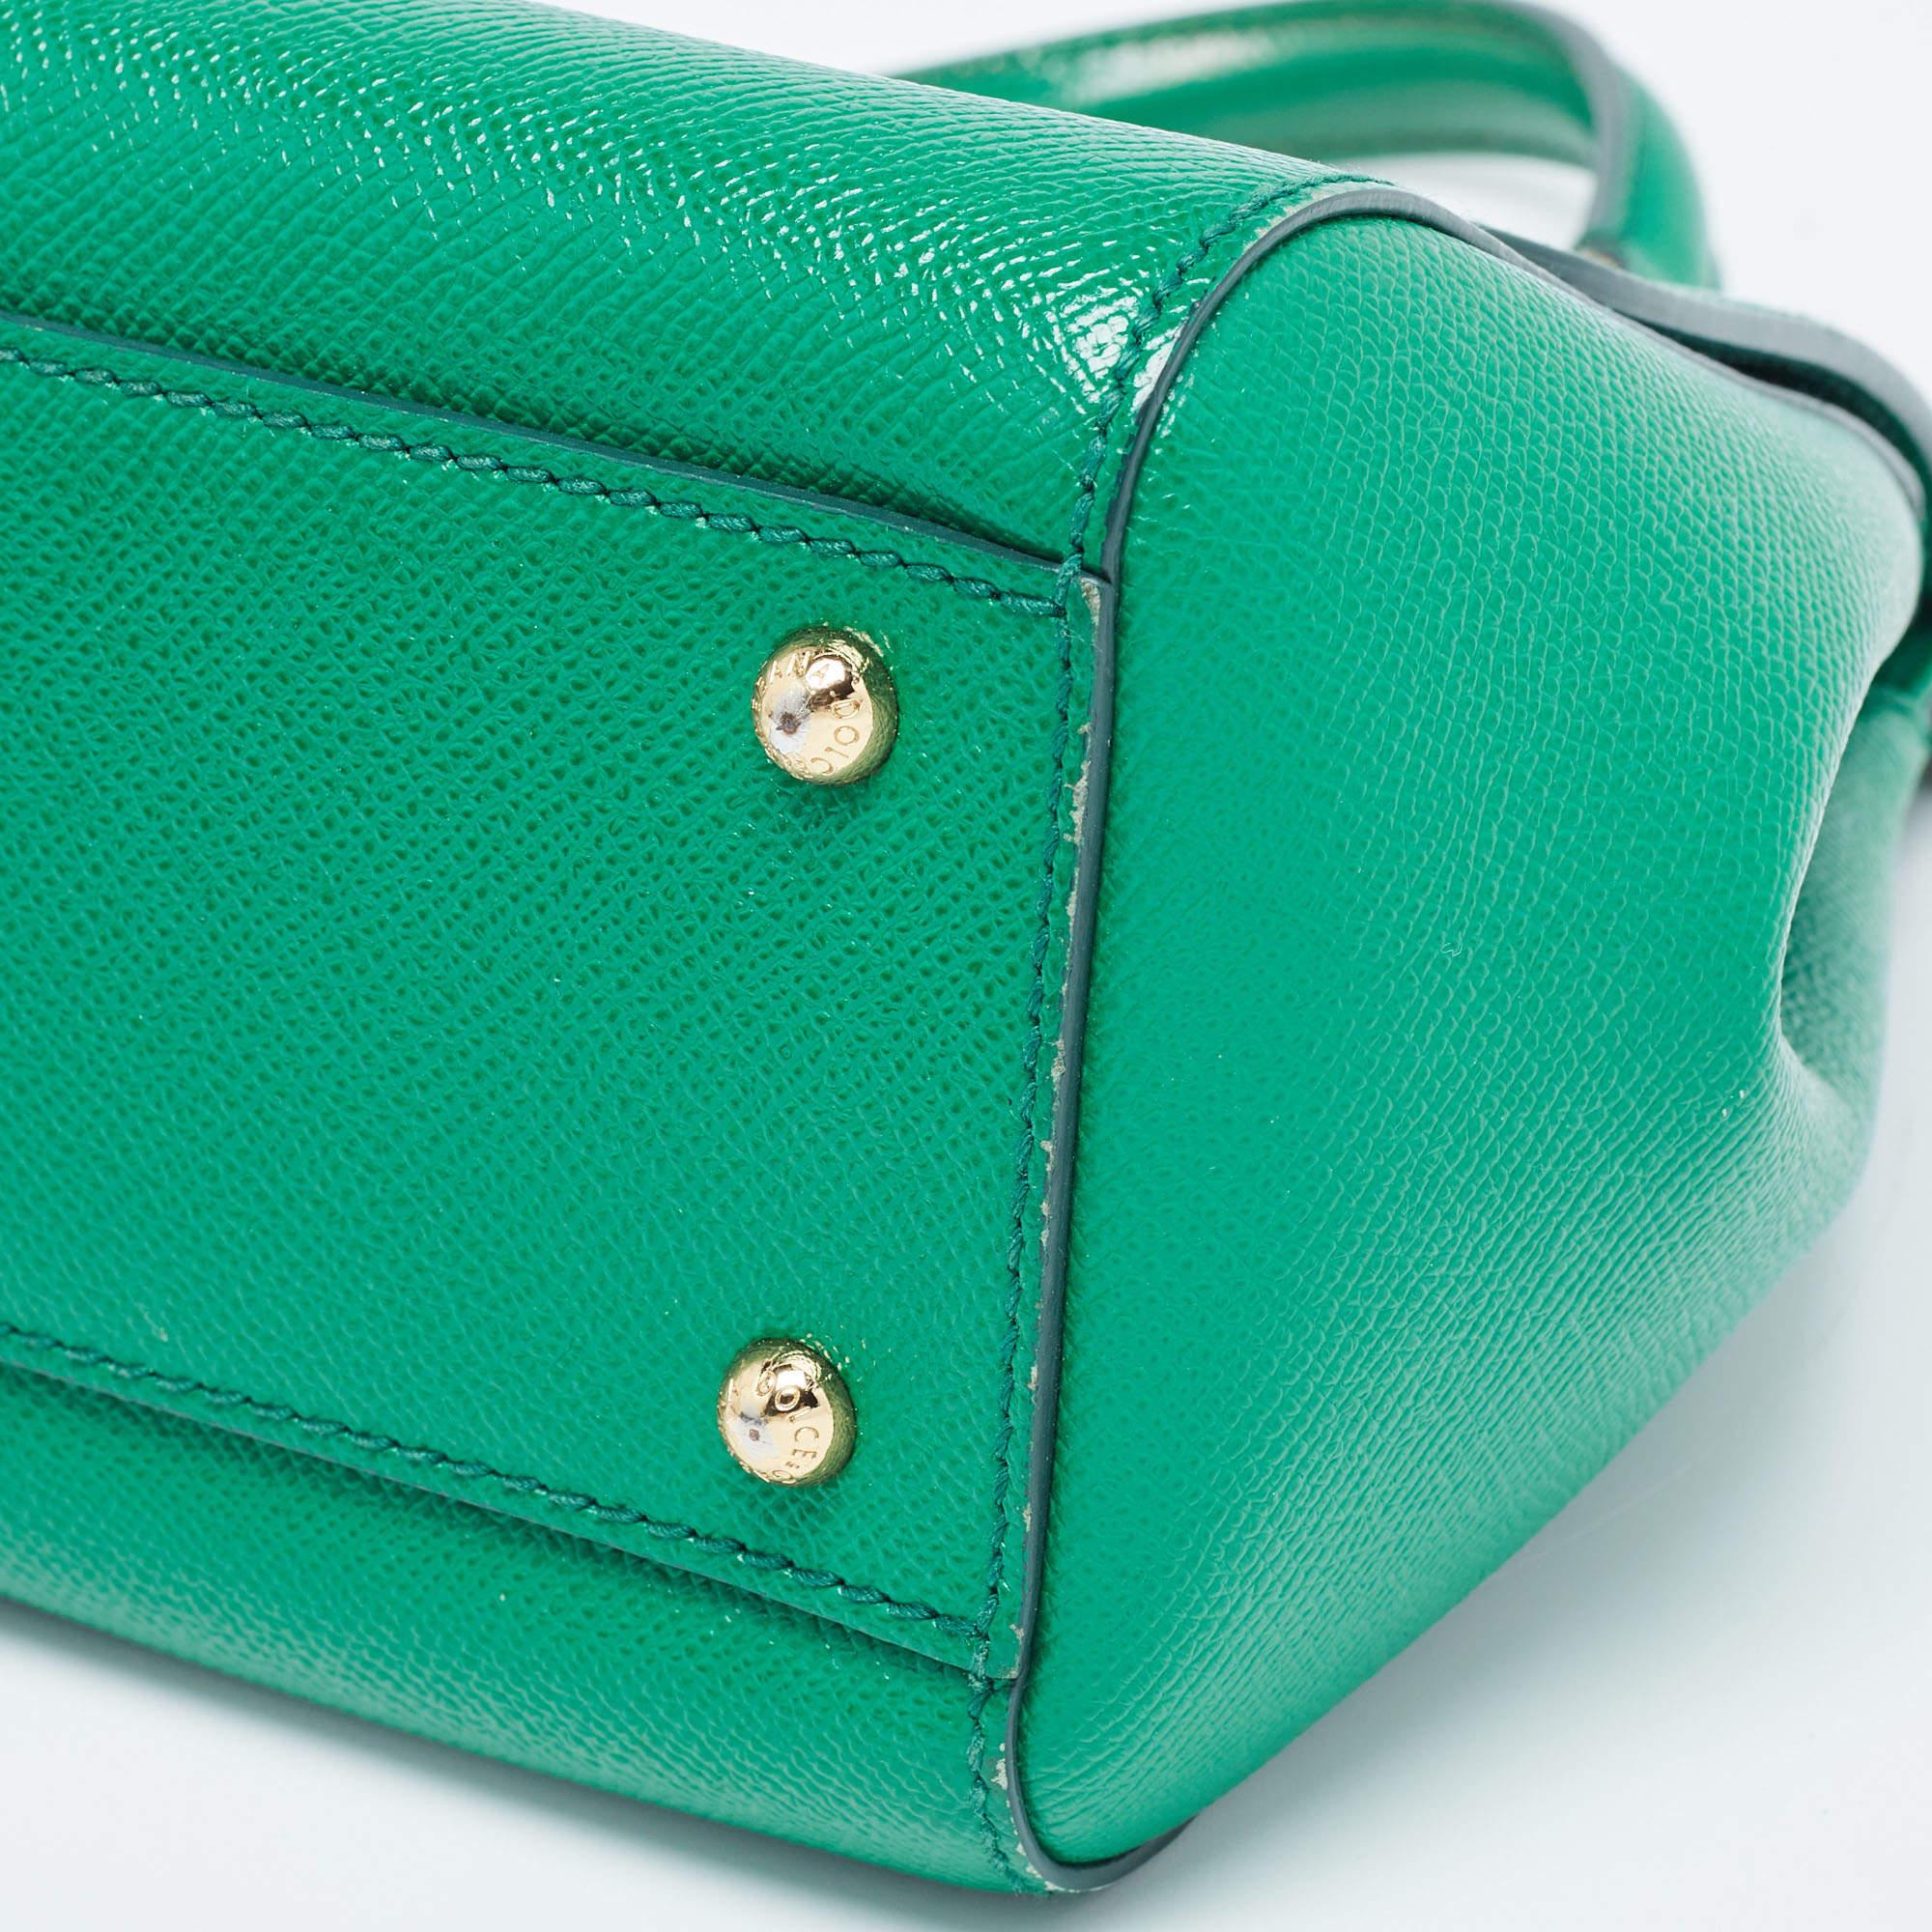 Dolce & Gabbana Green Leather Medium Miss Sicily Top Handle Bag 7